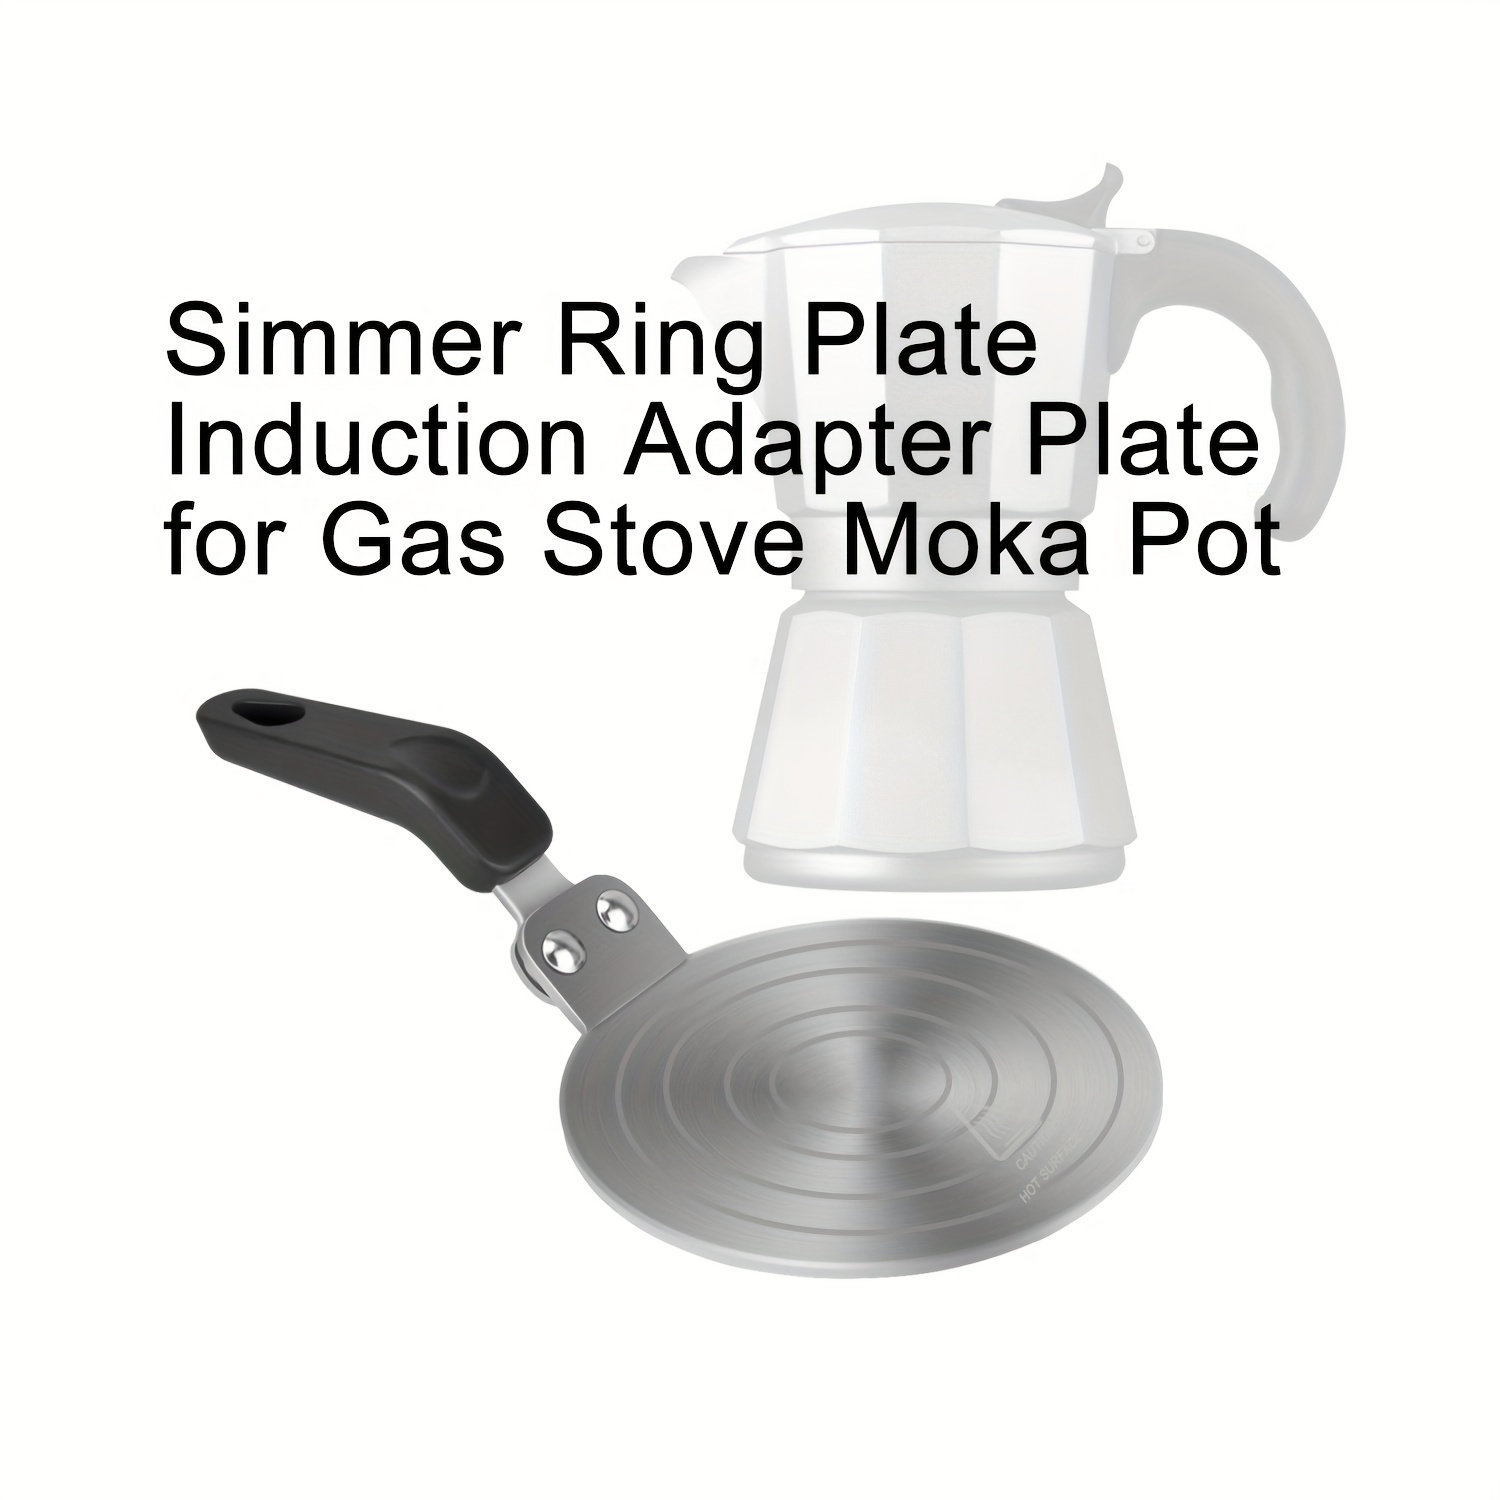 I ain't buying no induction plate adapter for my aluminium moka pot :  r/redneckengineering